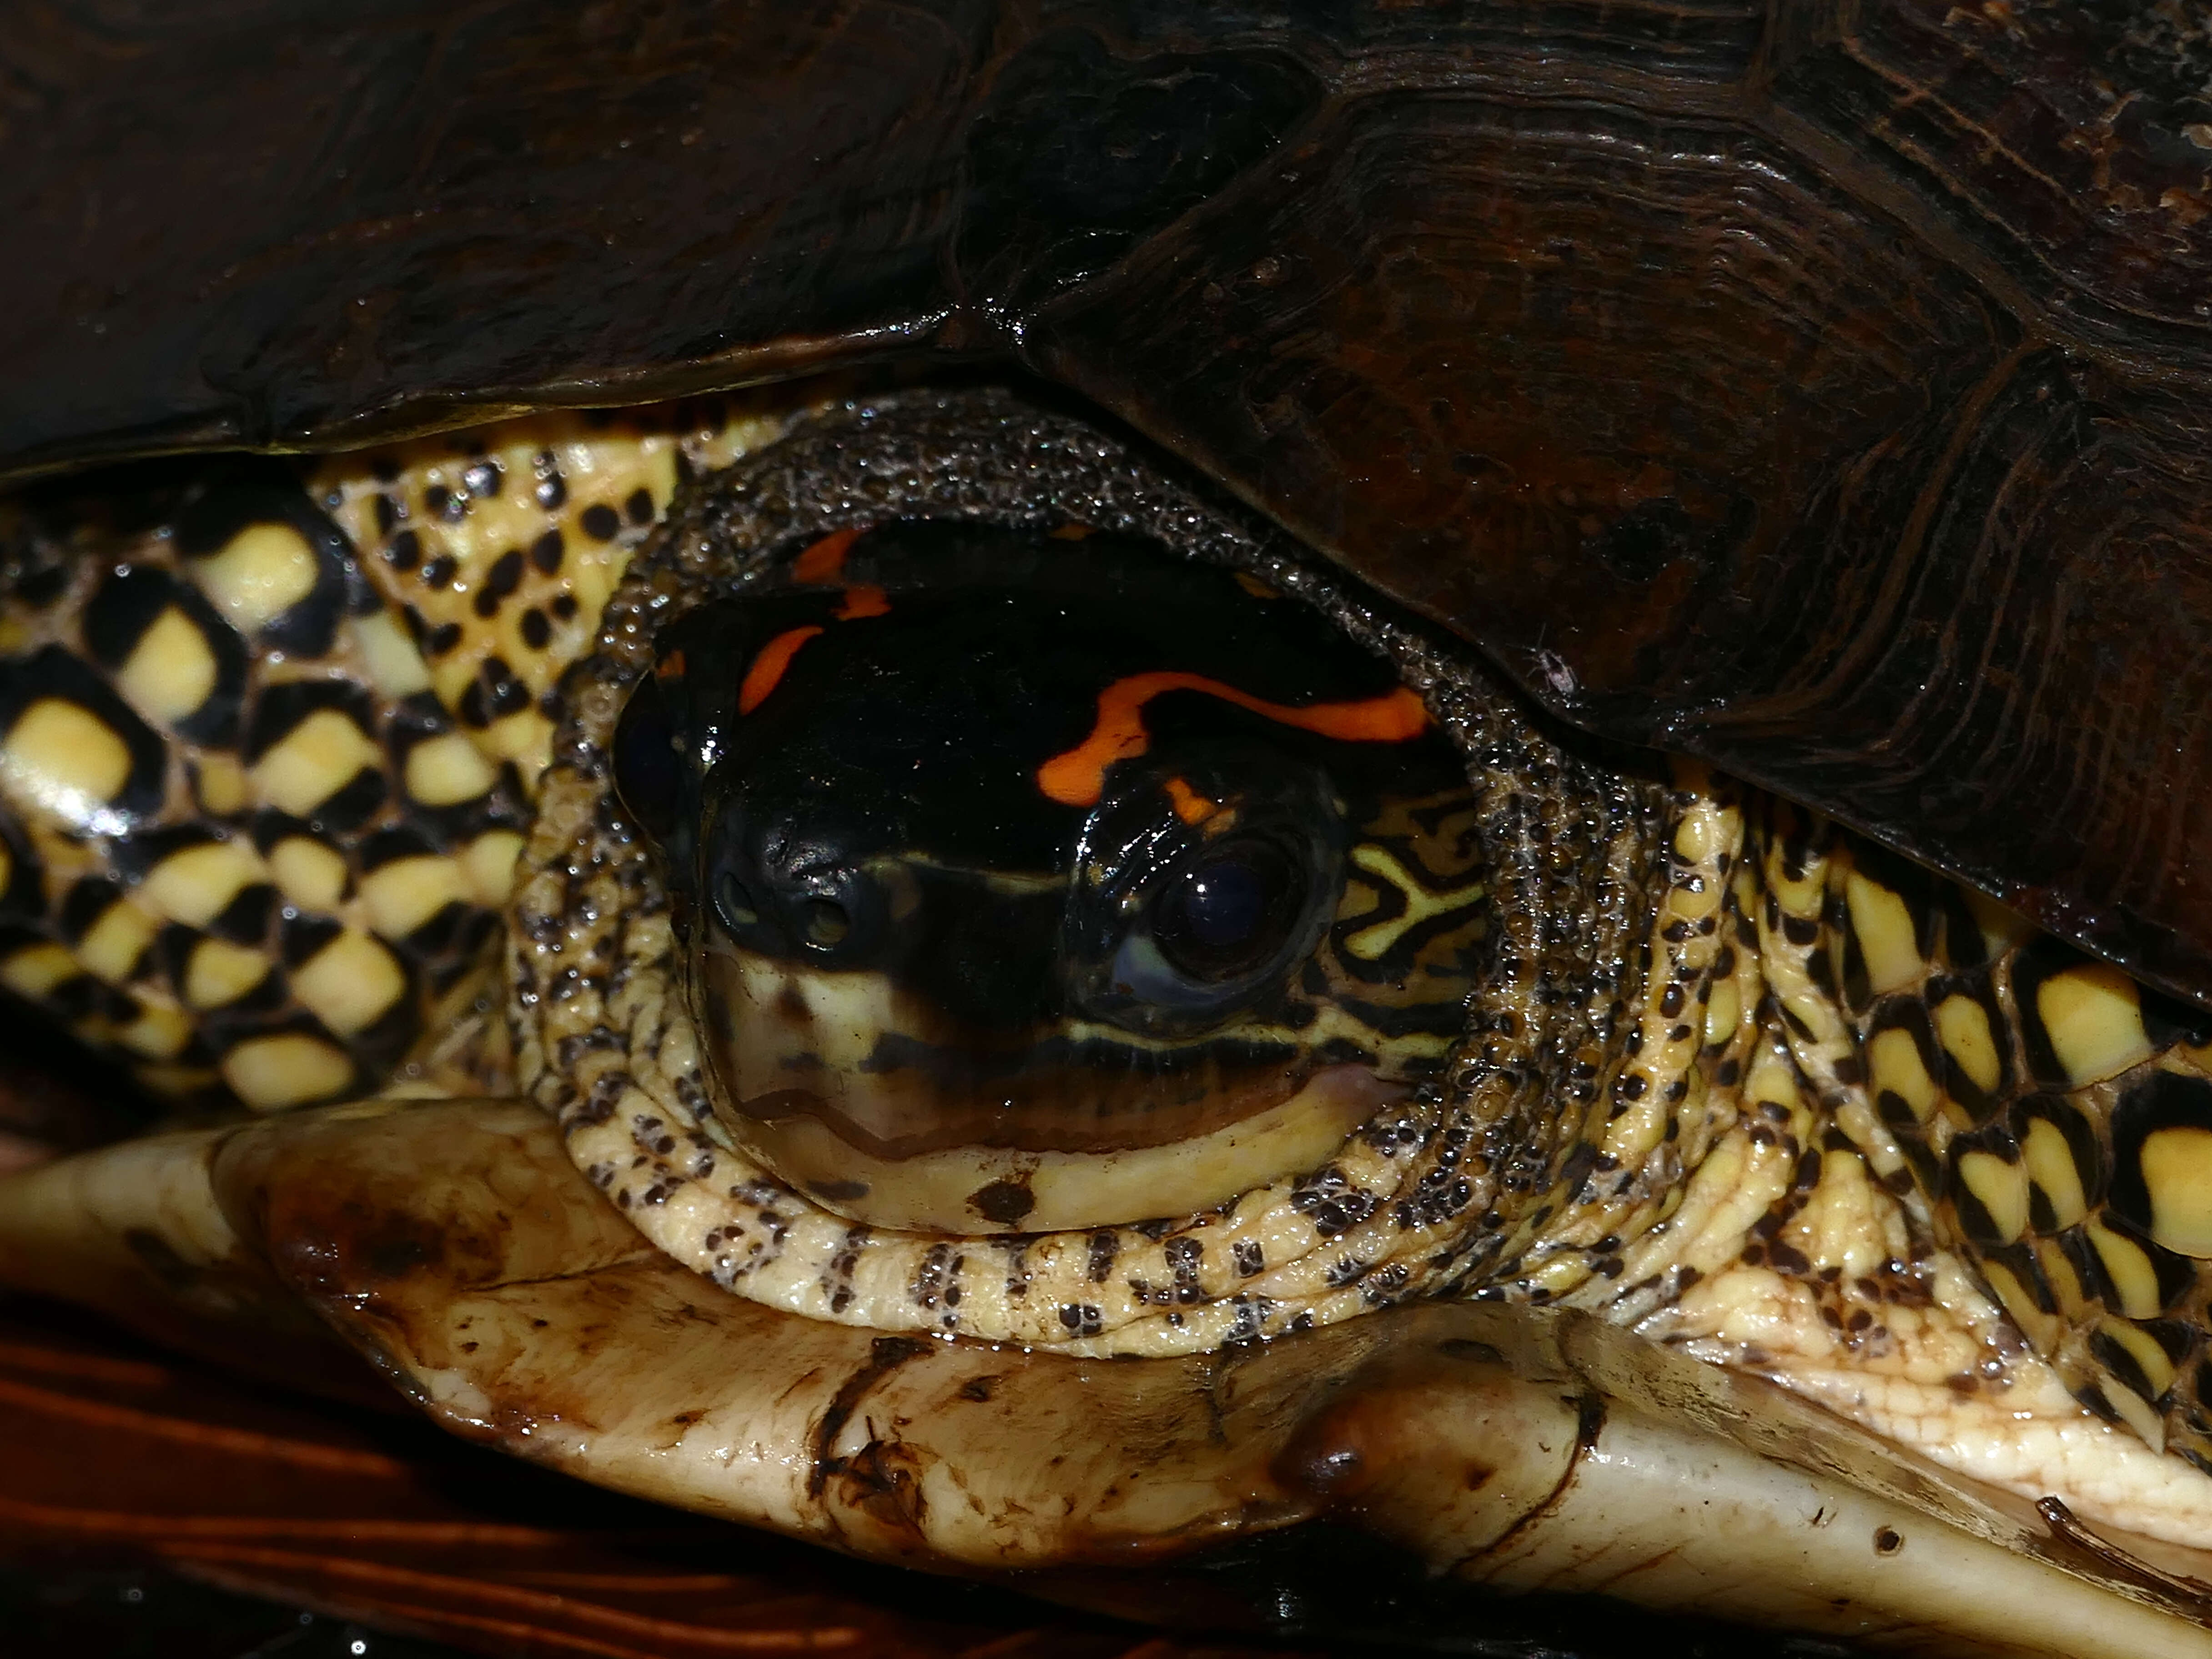 Image of Neotropical wood turtles